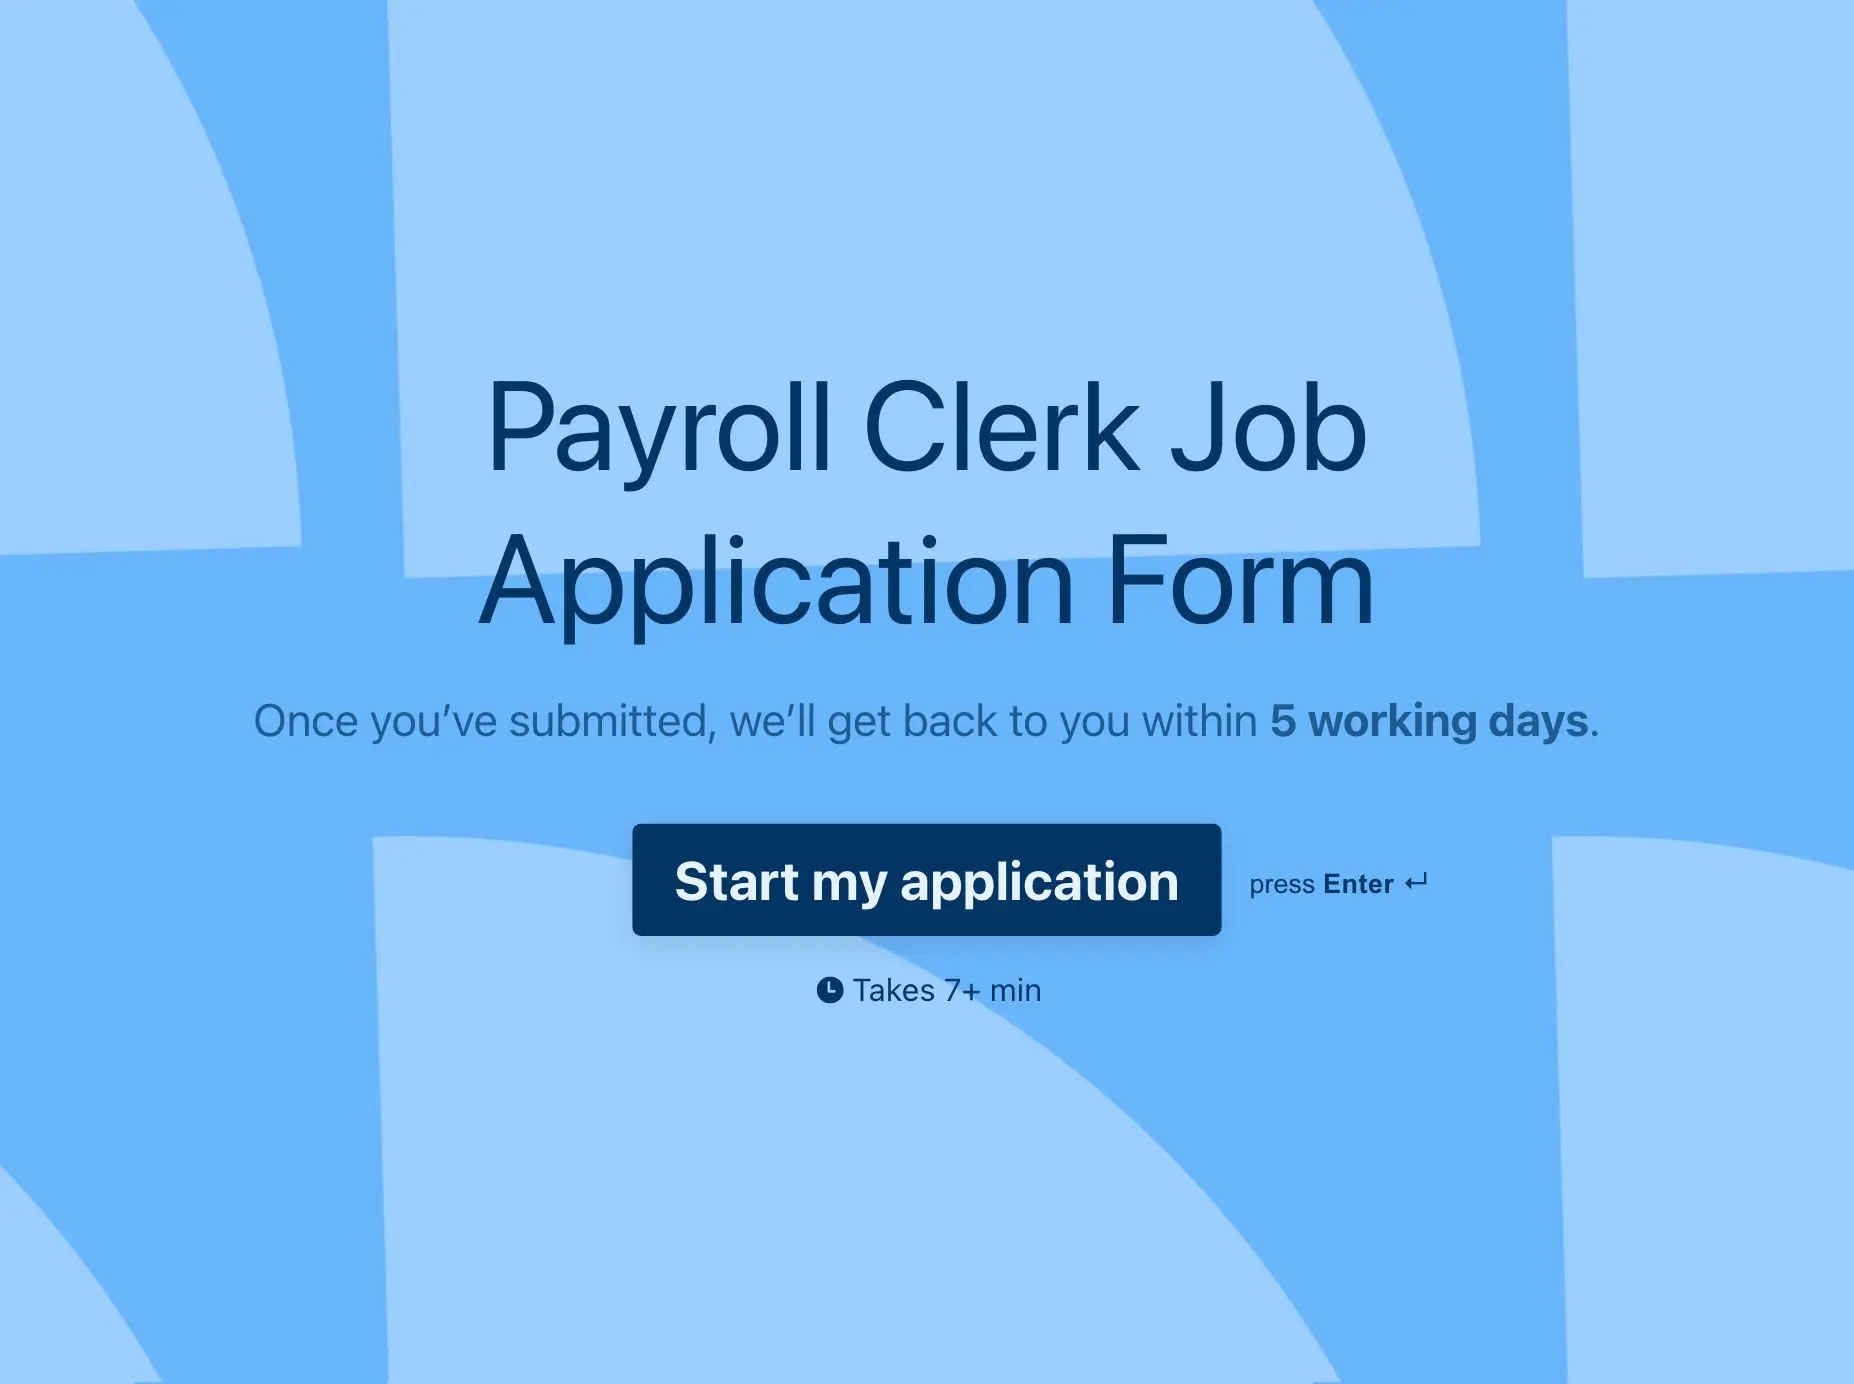 Payroll Clerk Job Application Form Template Hero